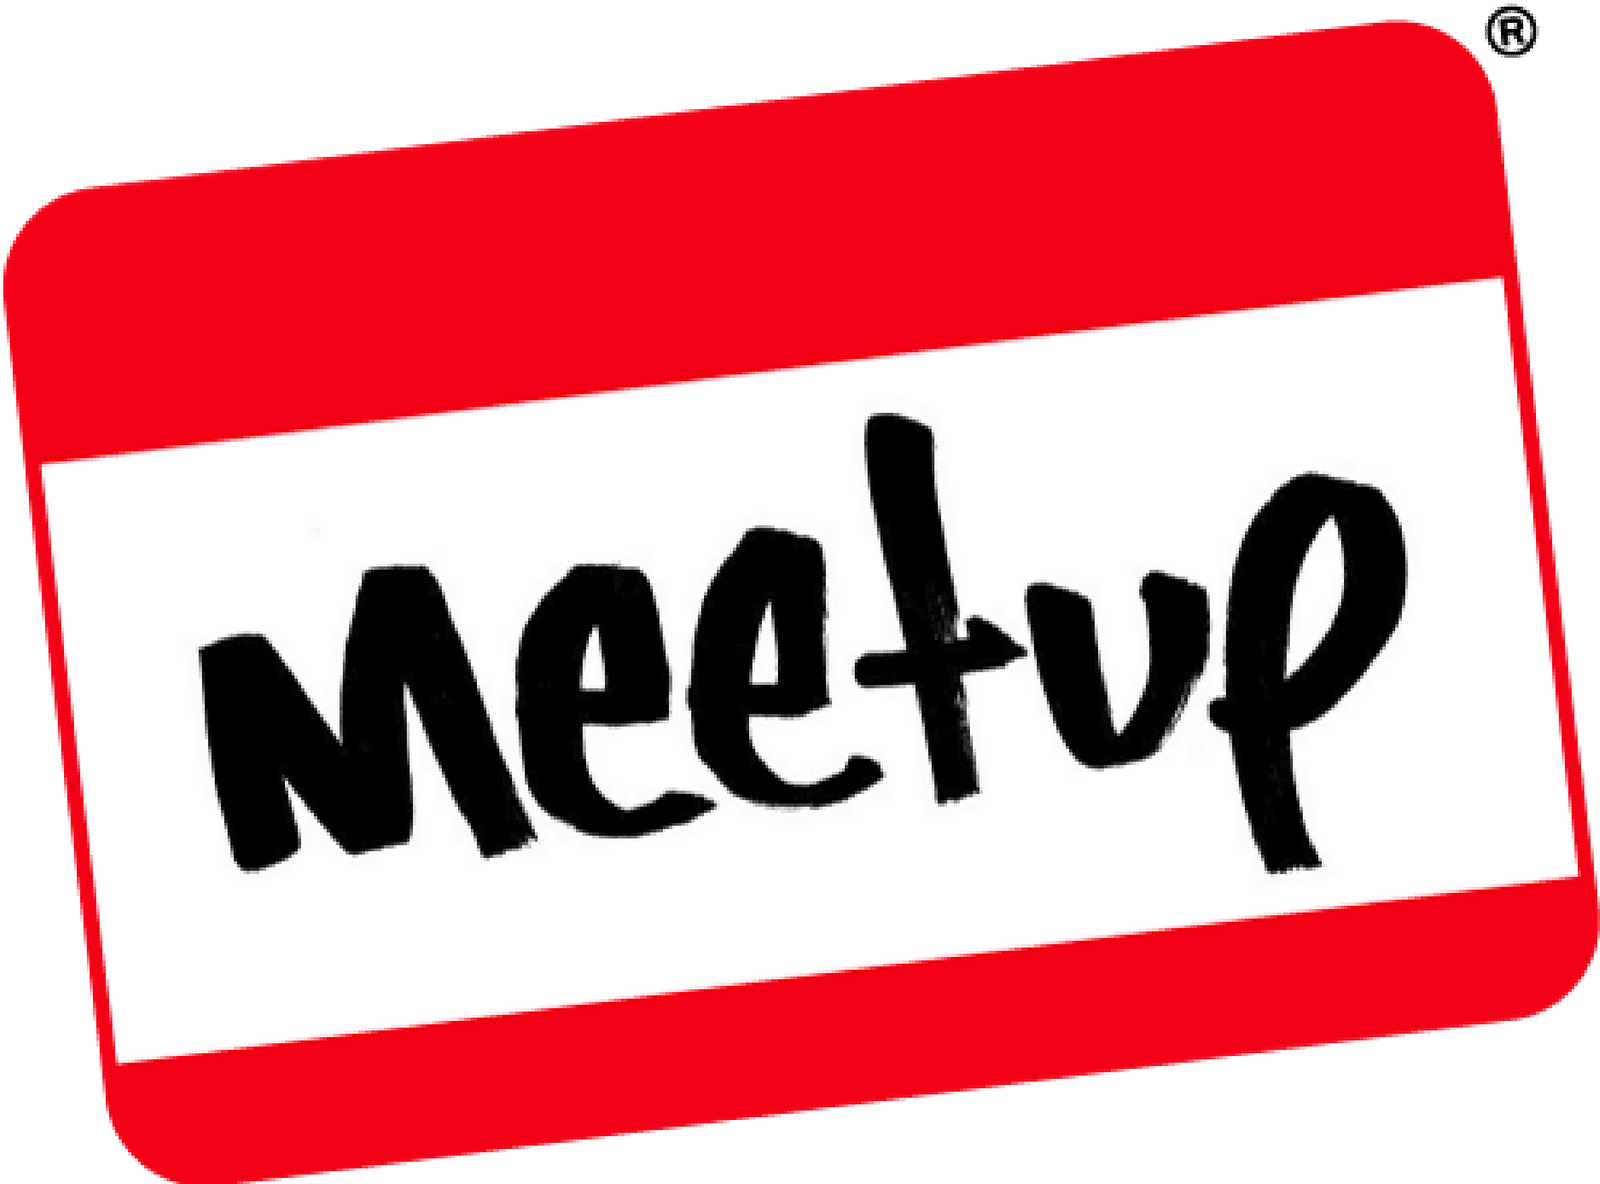 Spanish Conversation Meetup